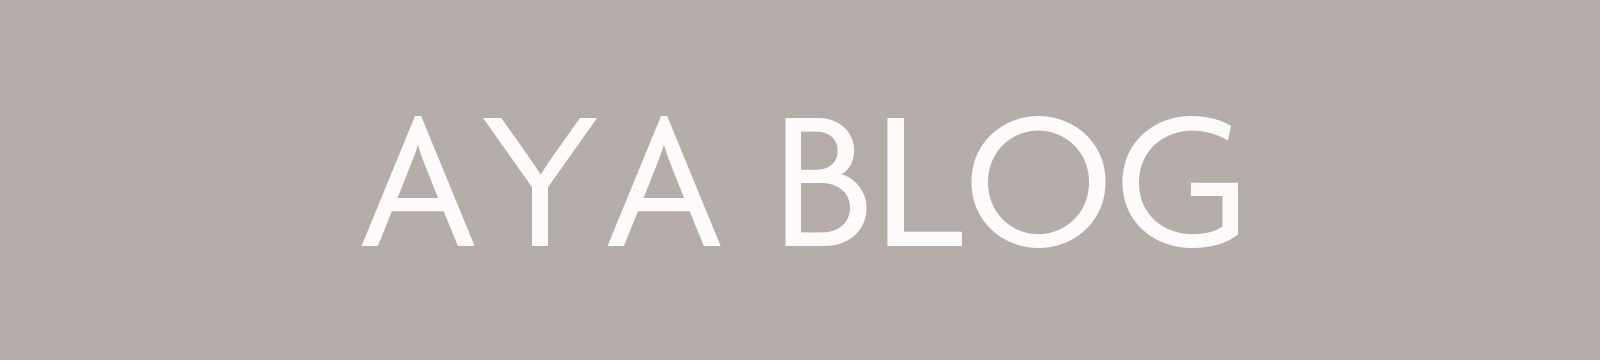 Aya blog-のんびり暮らし